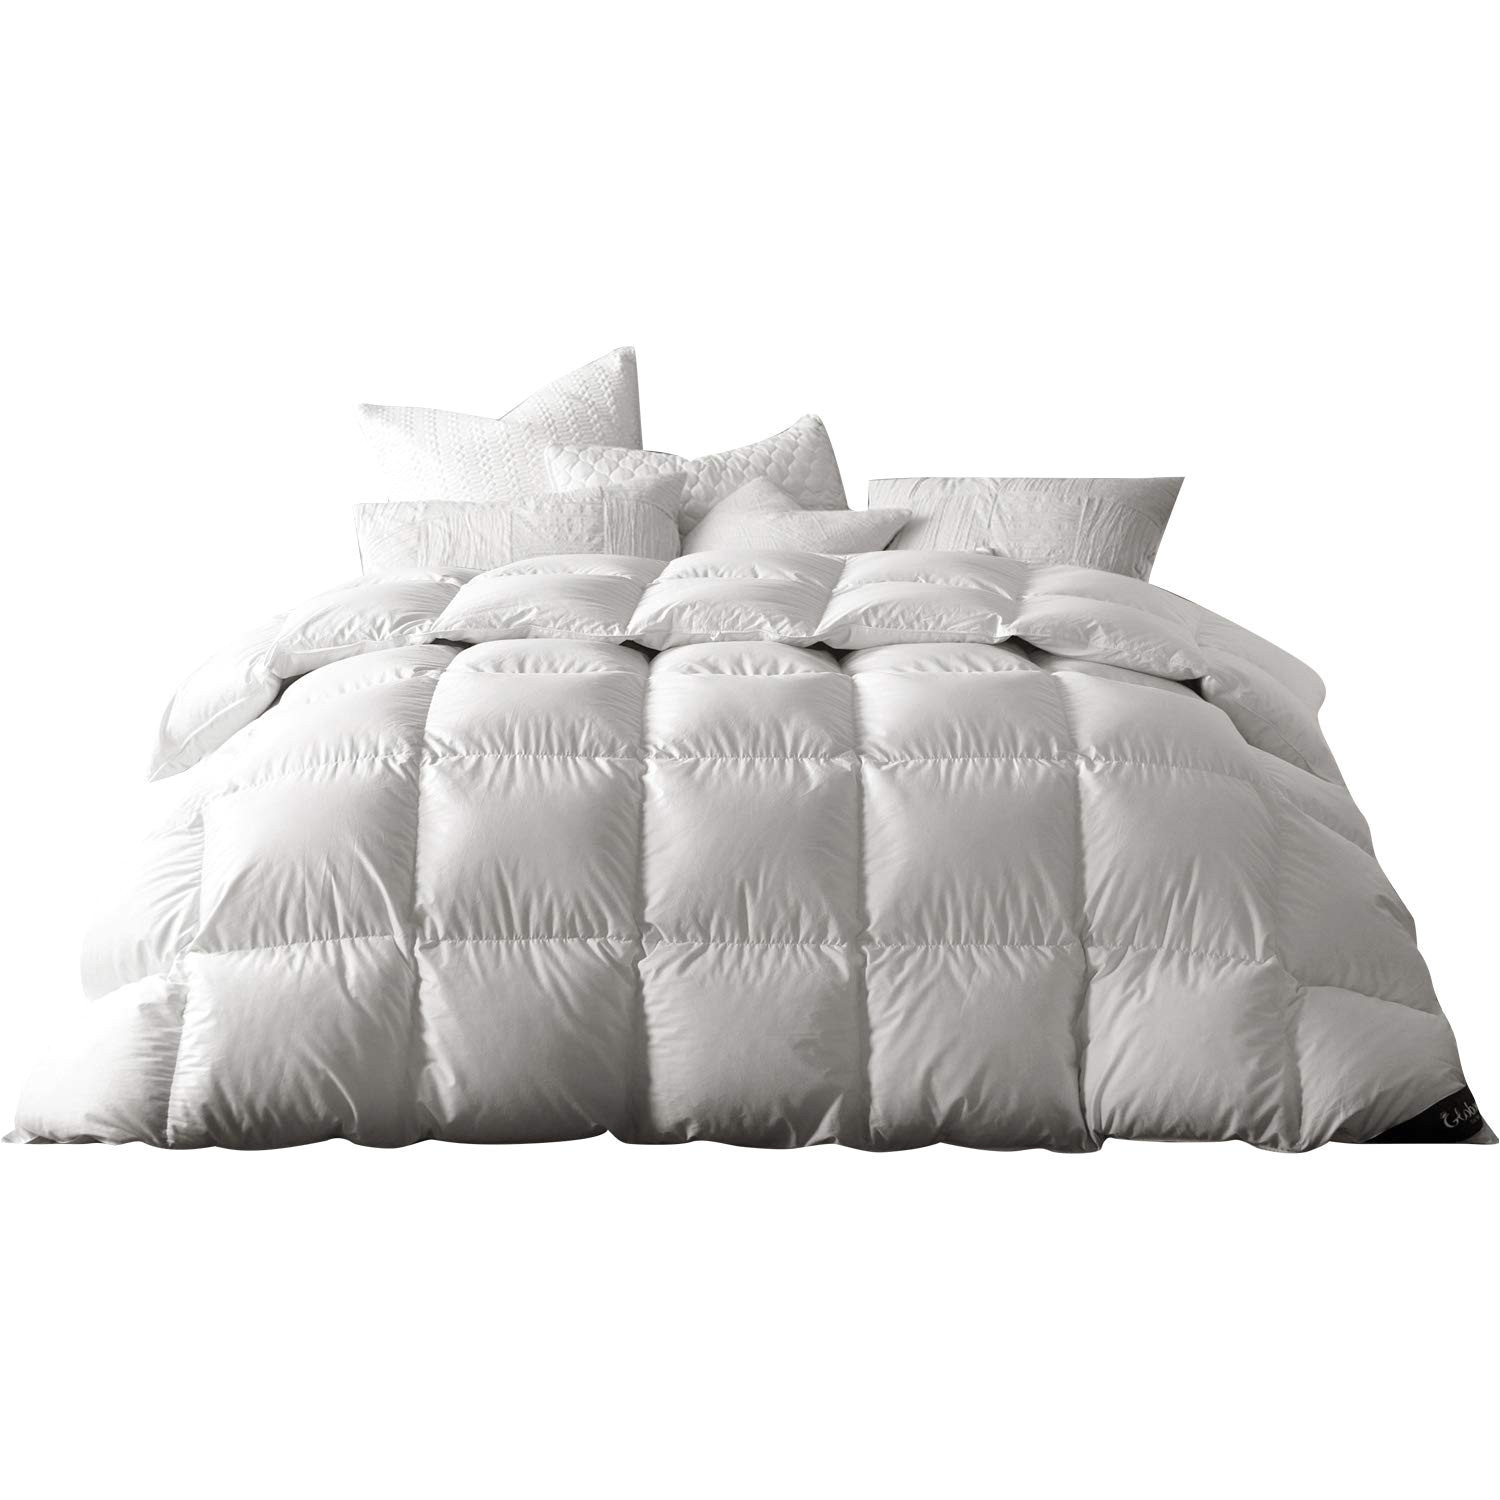 amazon com globon winter white goose down comforter king size texcote nano treated 60 oz 700 fill power 400 thread count 100 cotton shell